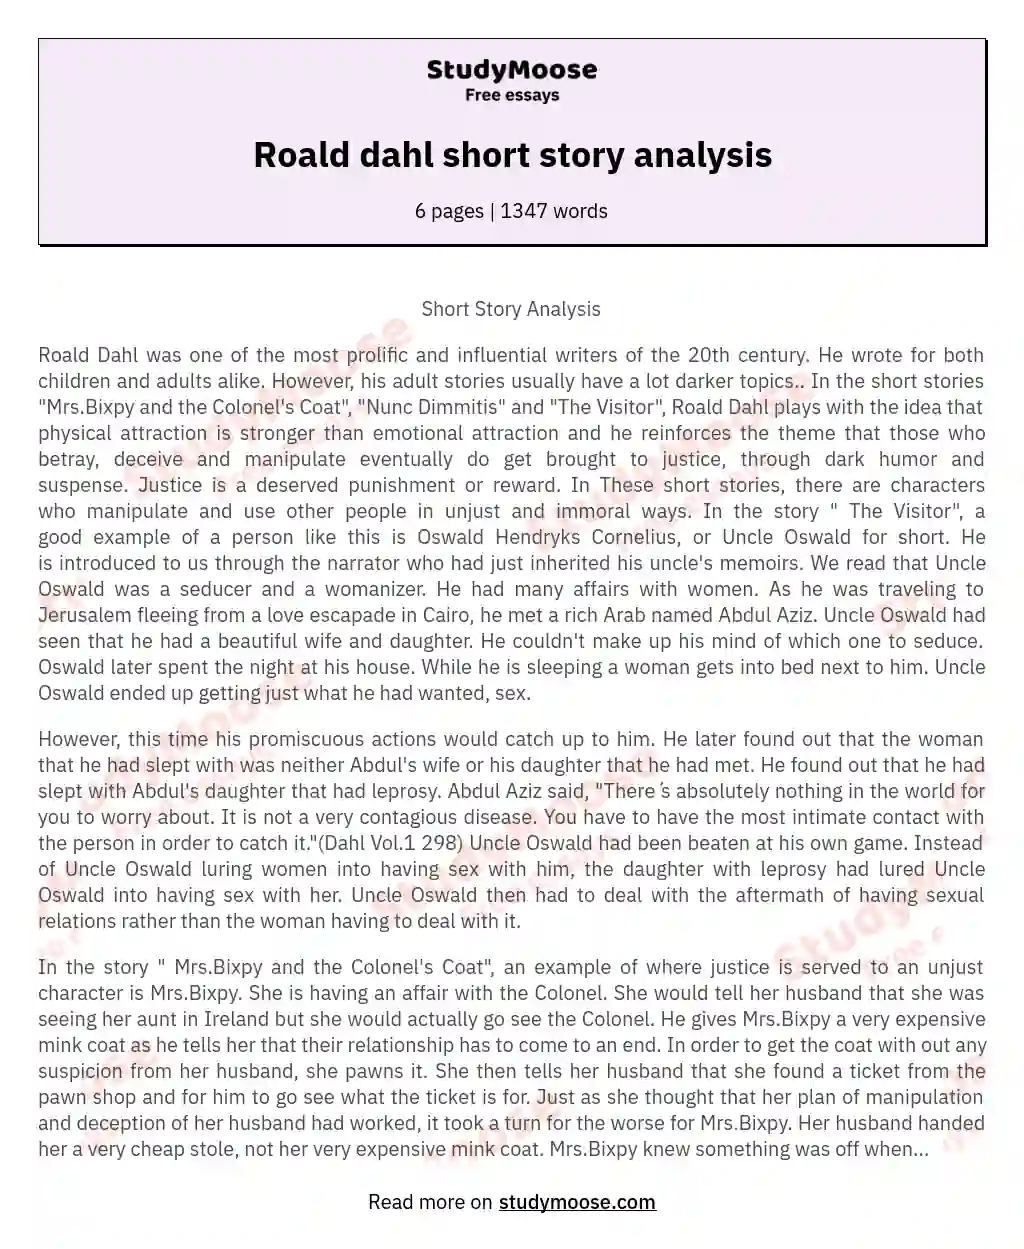 Roald dahl short story analysis essay